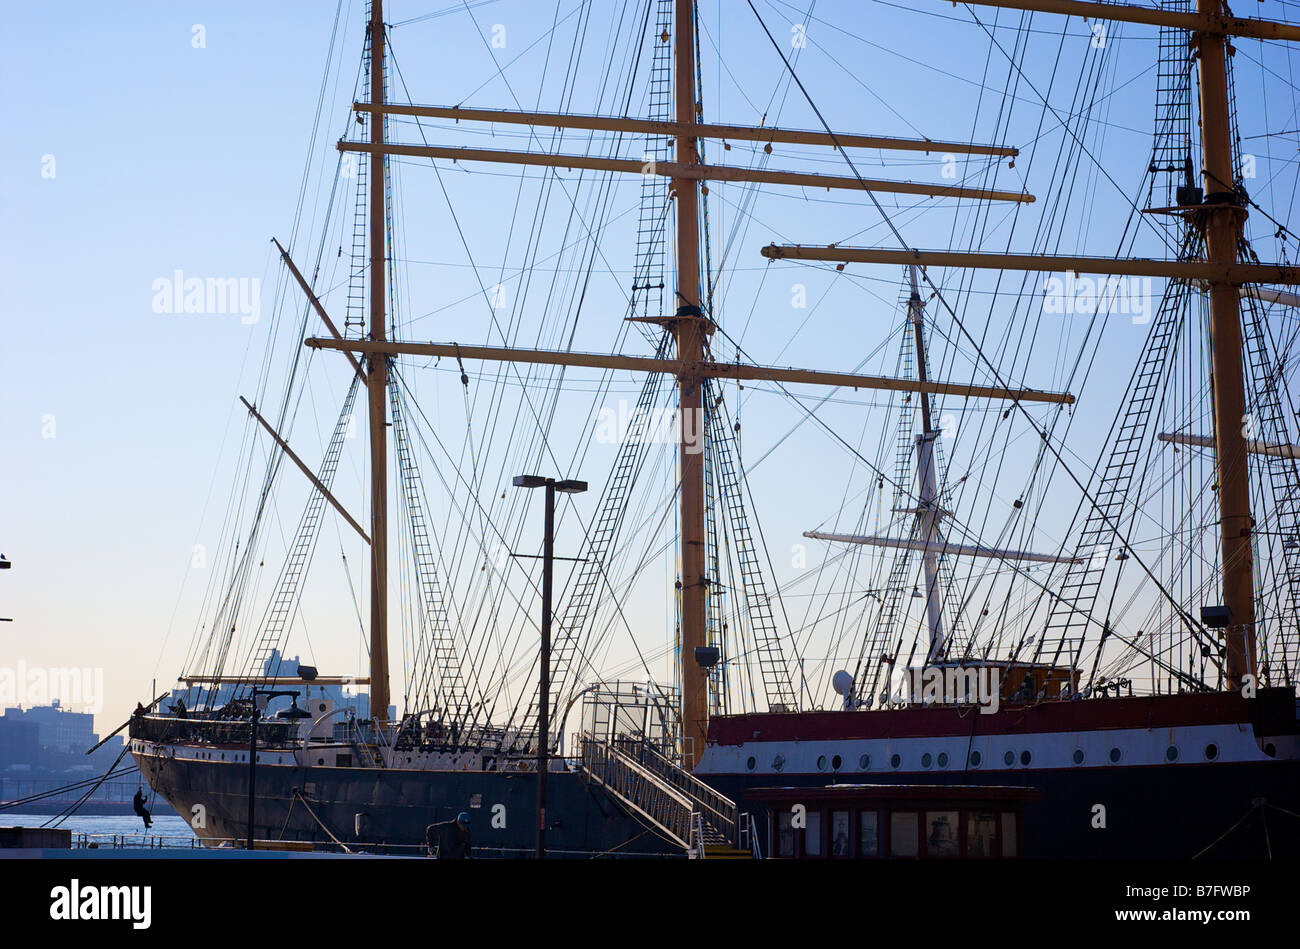 Peking Sailing Ship at South Street Seaport in New York City USA Stock Photo